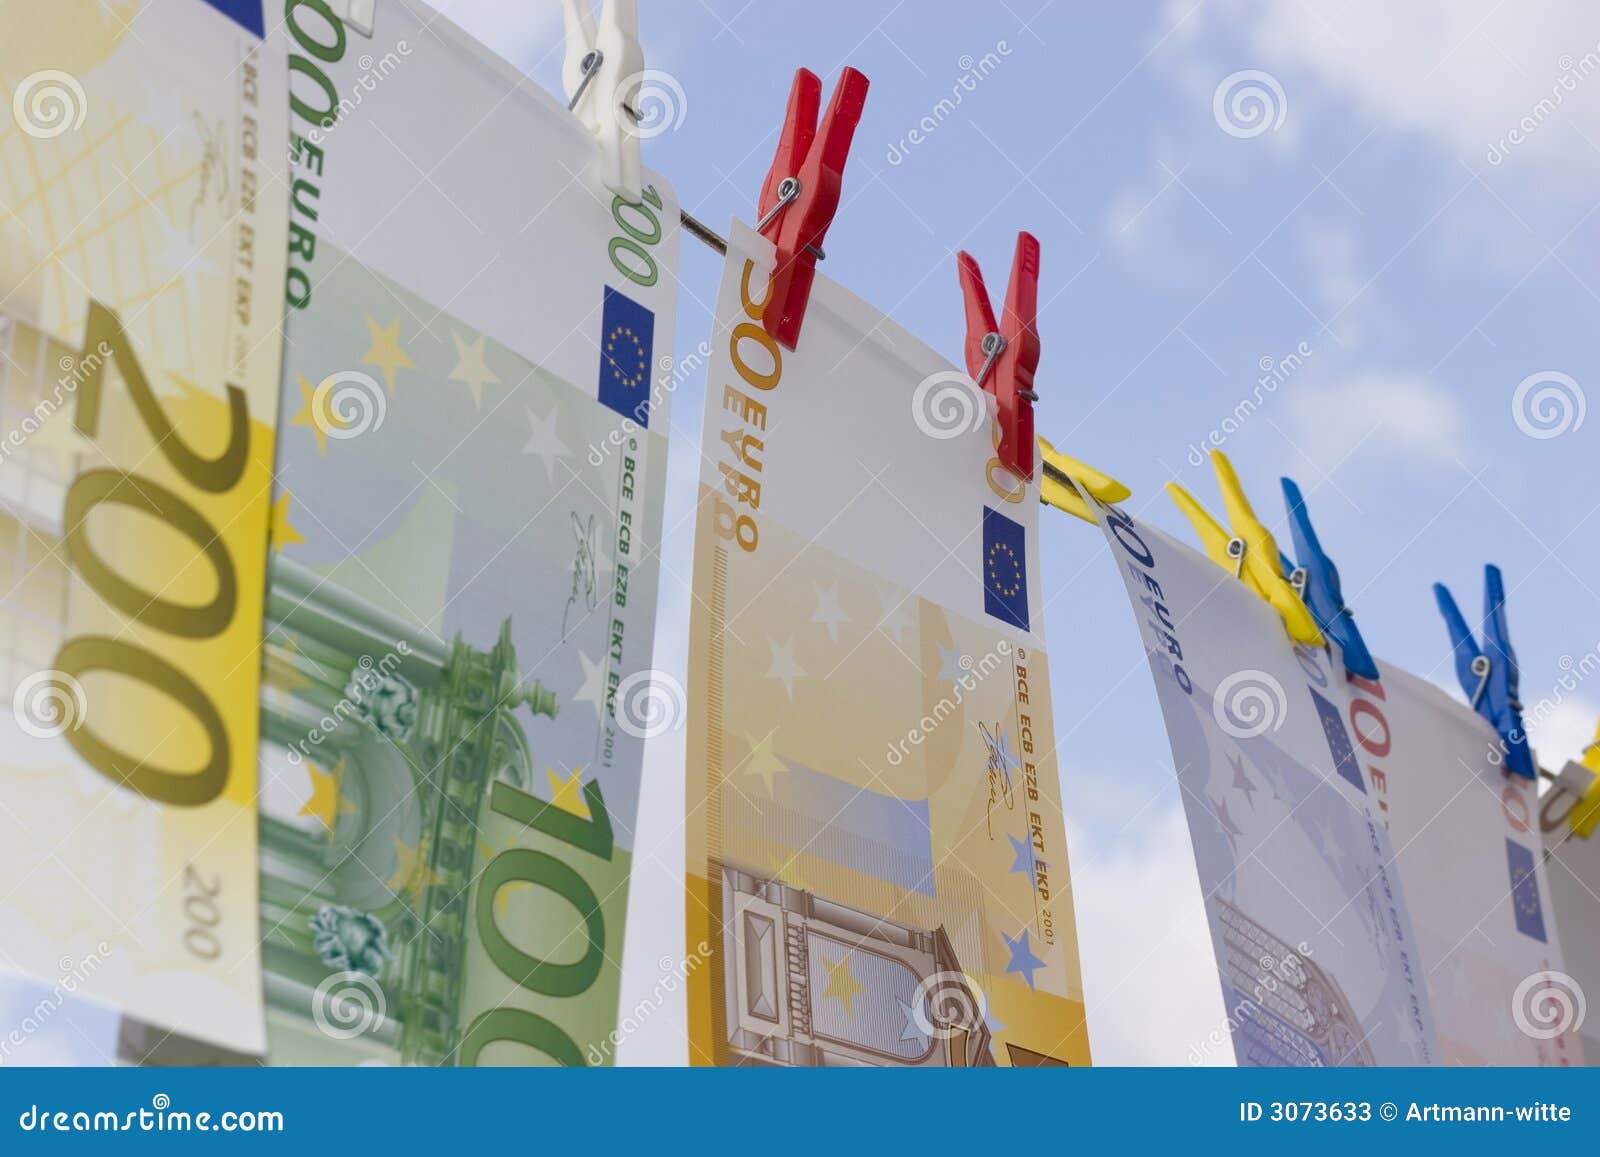 free clip art money laundering - photo #27